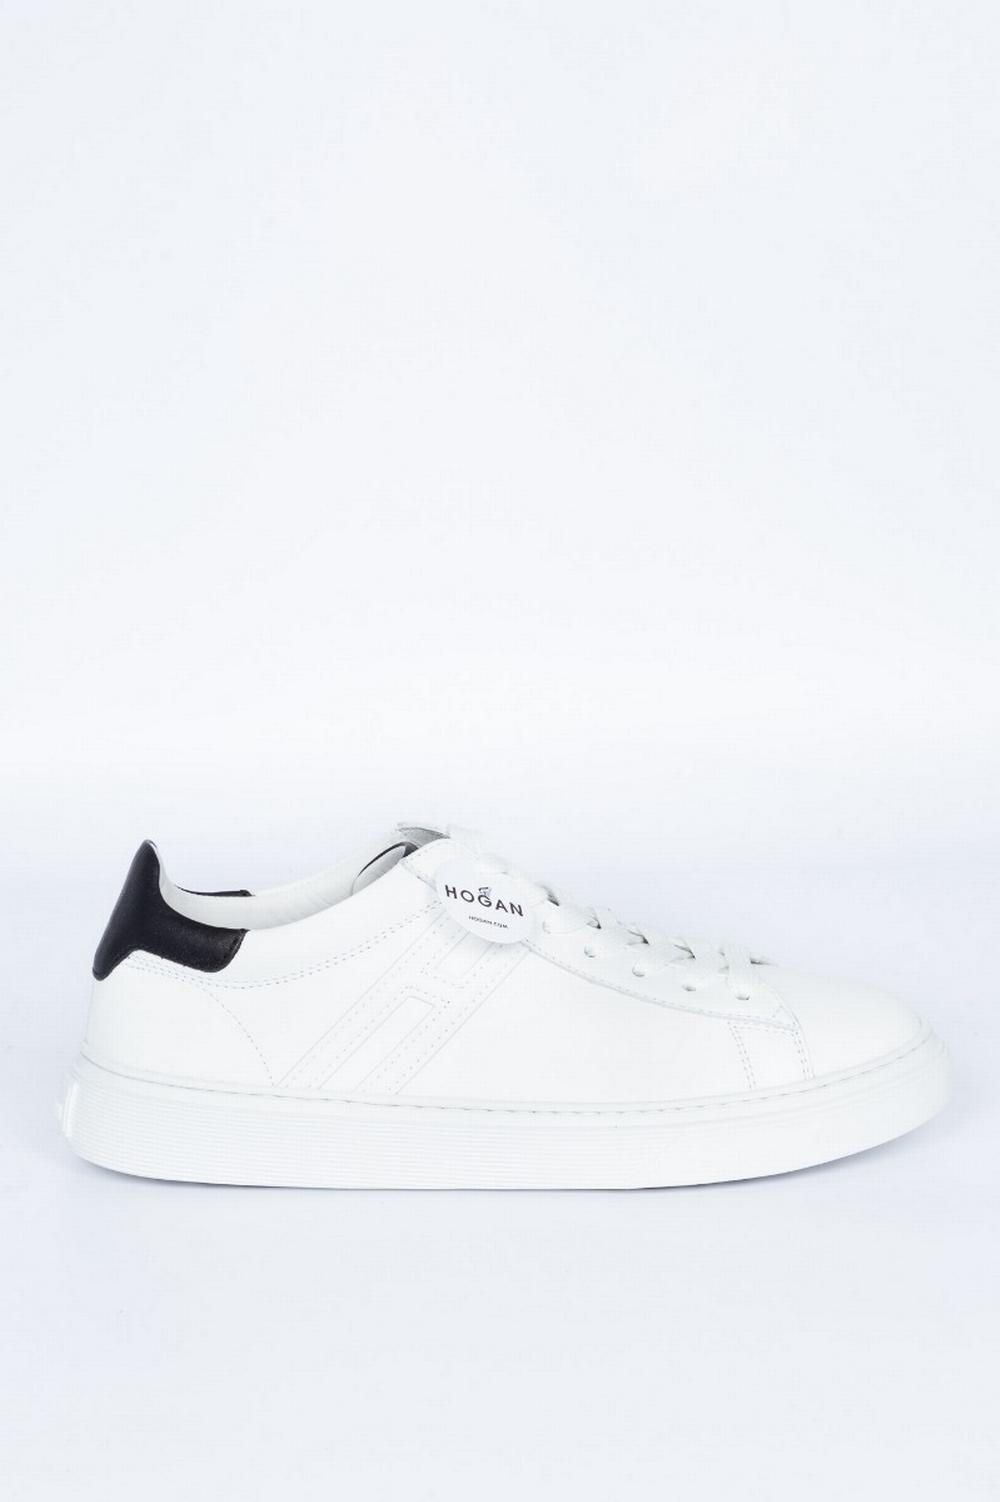 Hogan - Sneaker H365 Bianco/Nero Uomo - HXM3650J3100BV0001